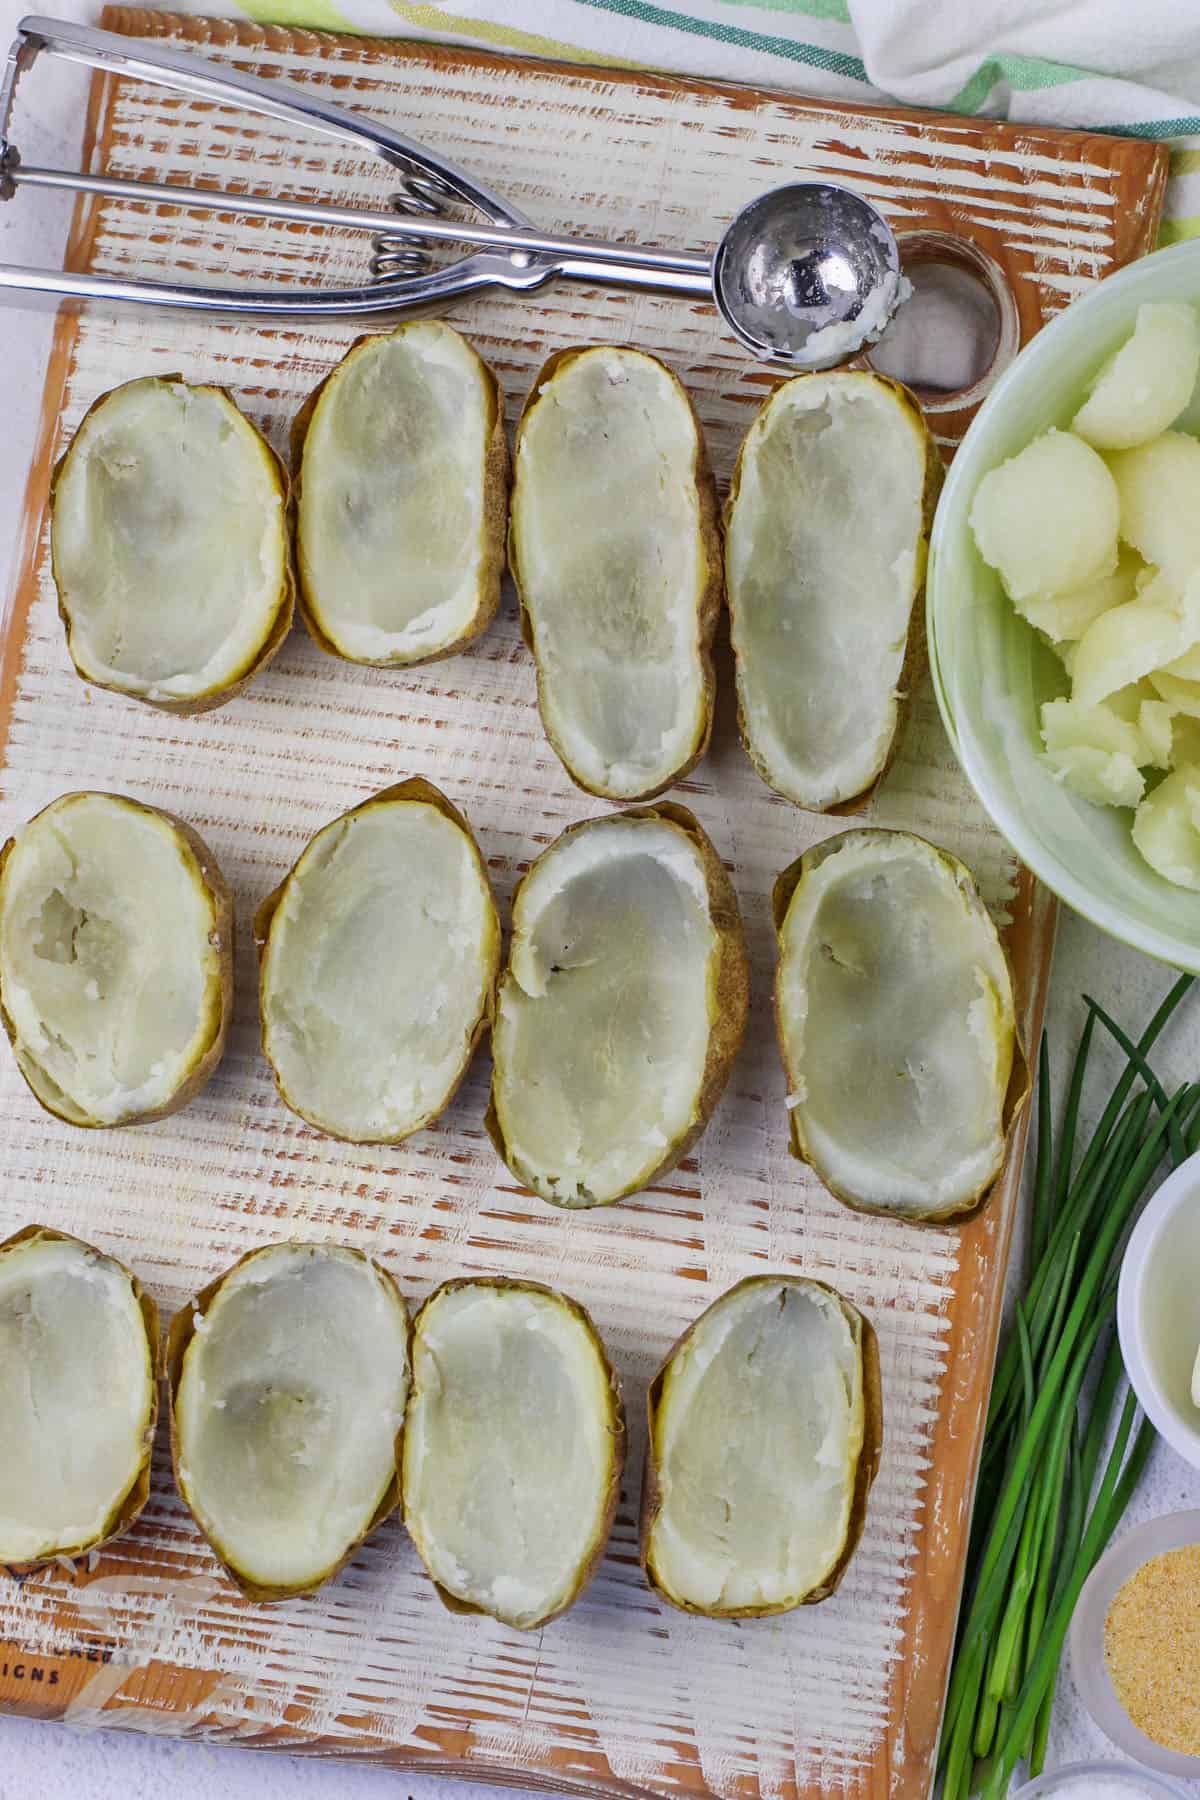 scooped out potatoes to make Potato Skins